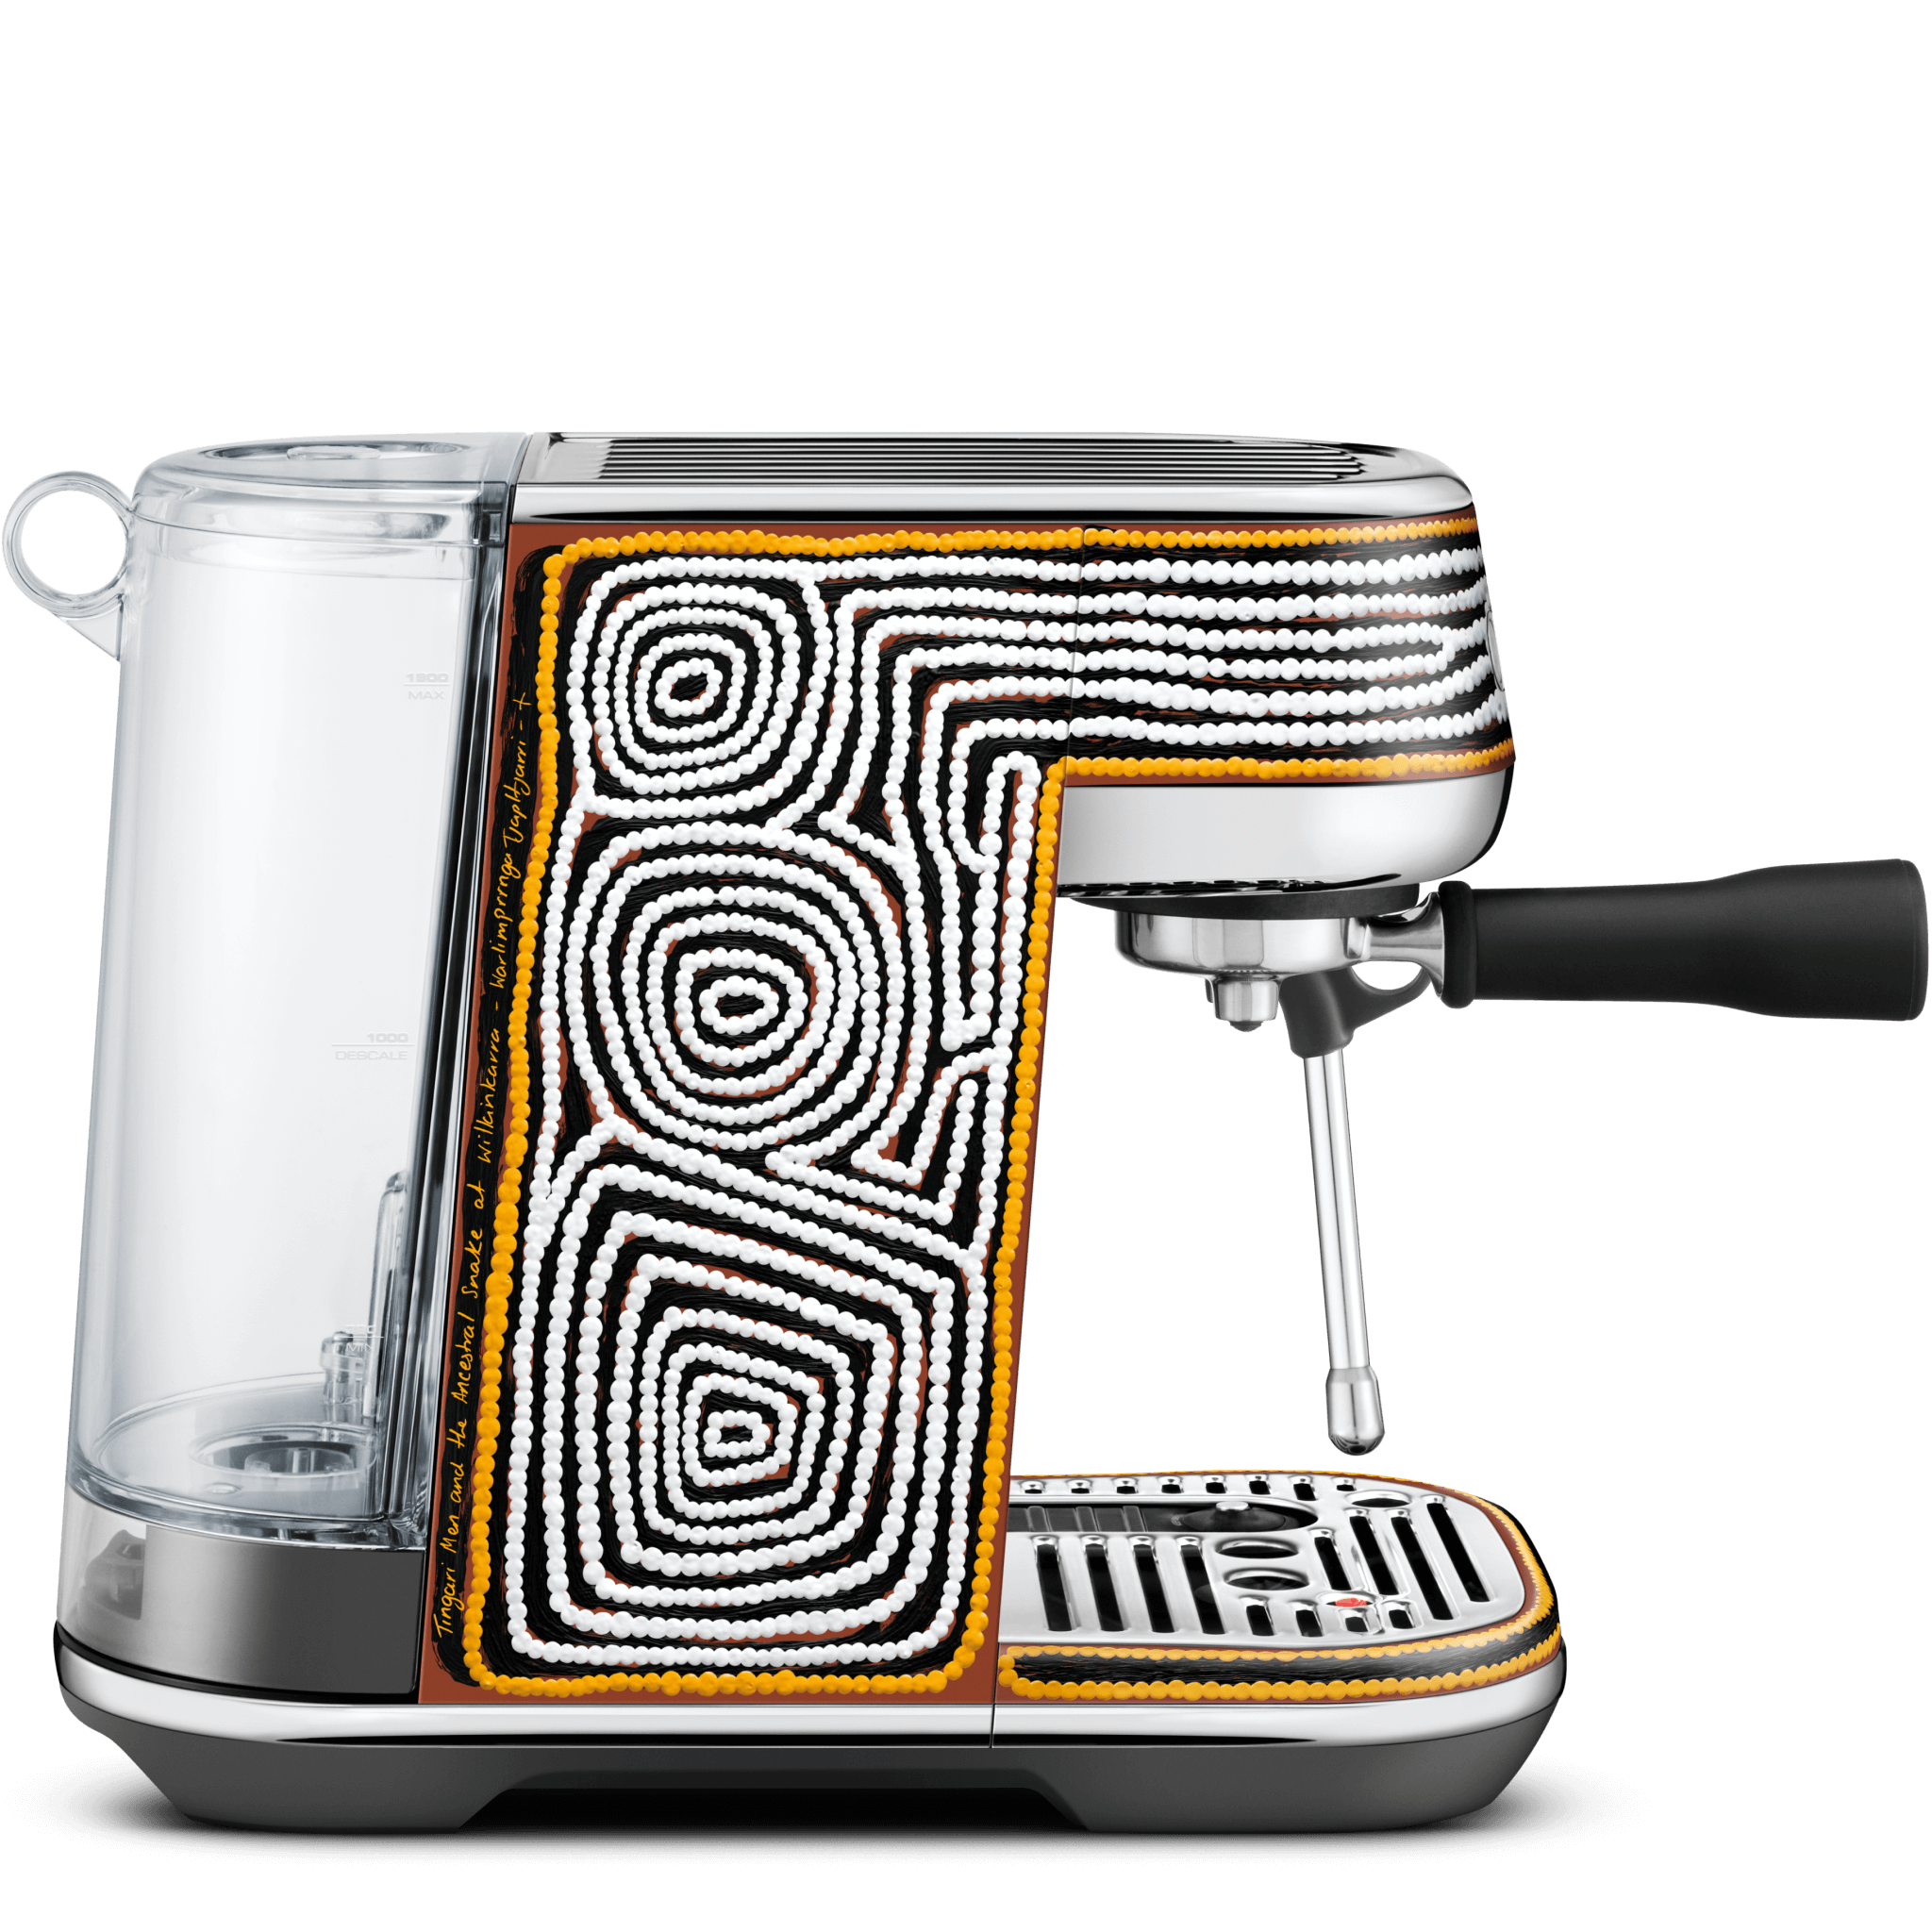 Breville Bambino Plus Espresso Art with Tingari Aboriginal Design